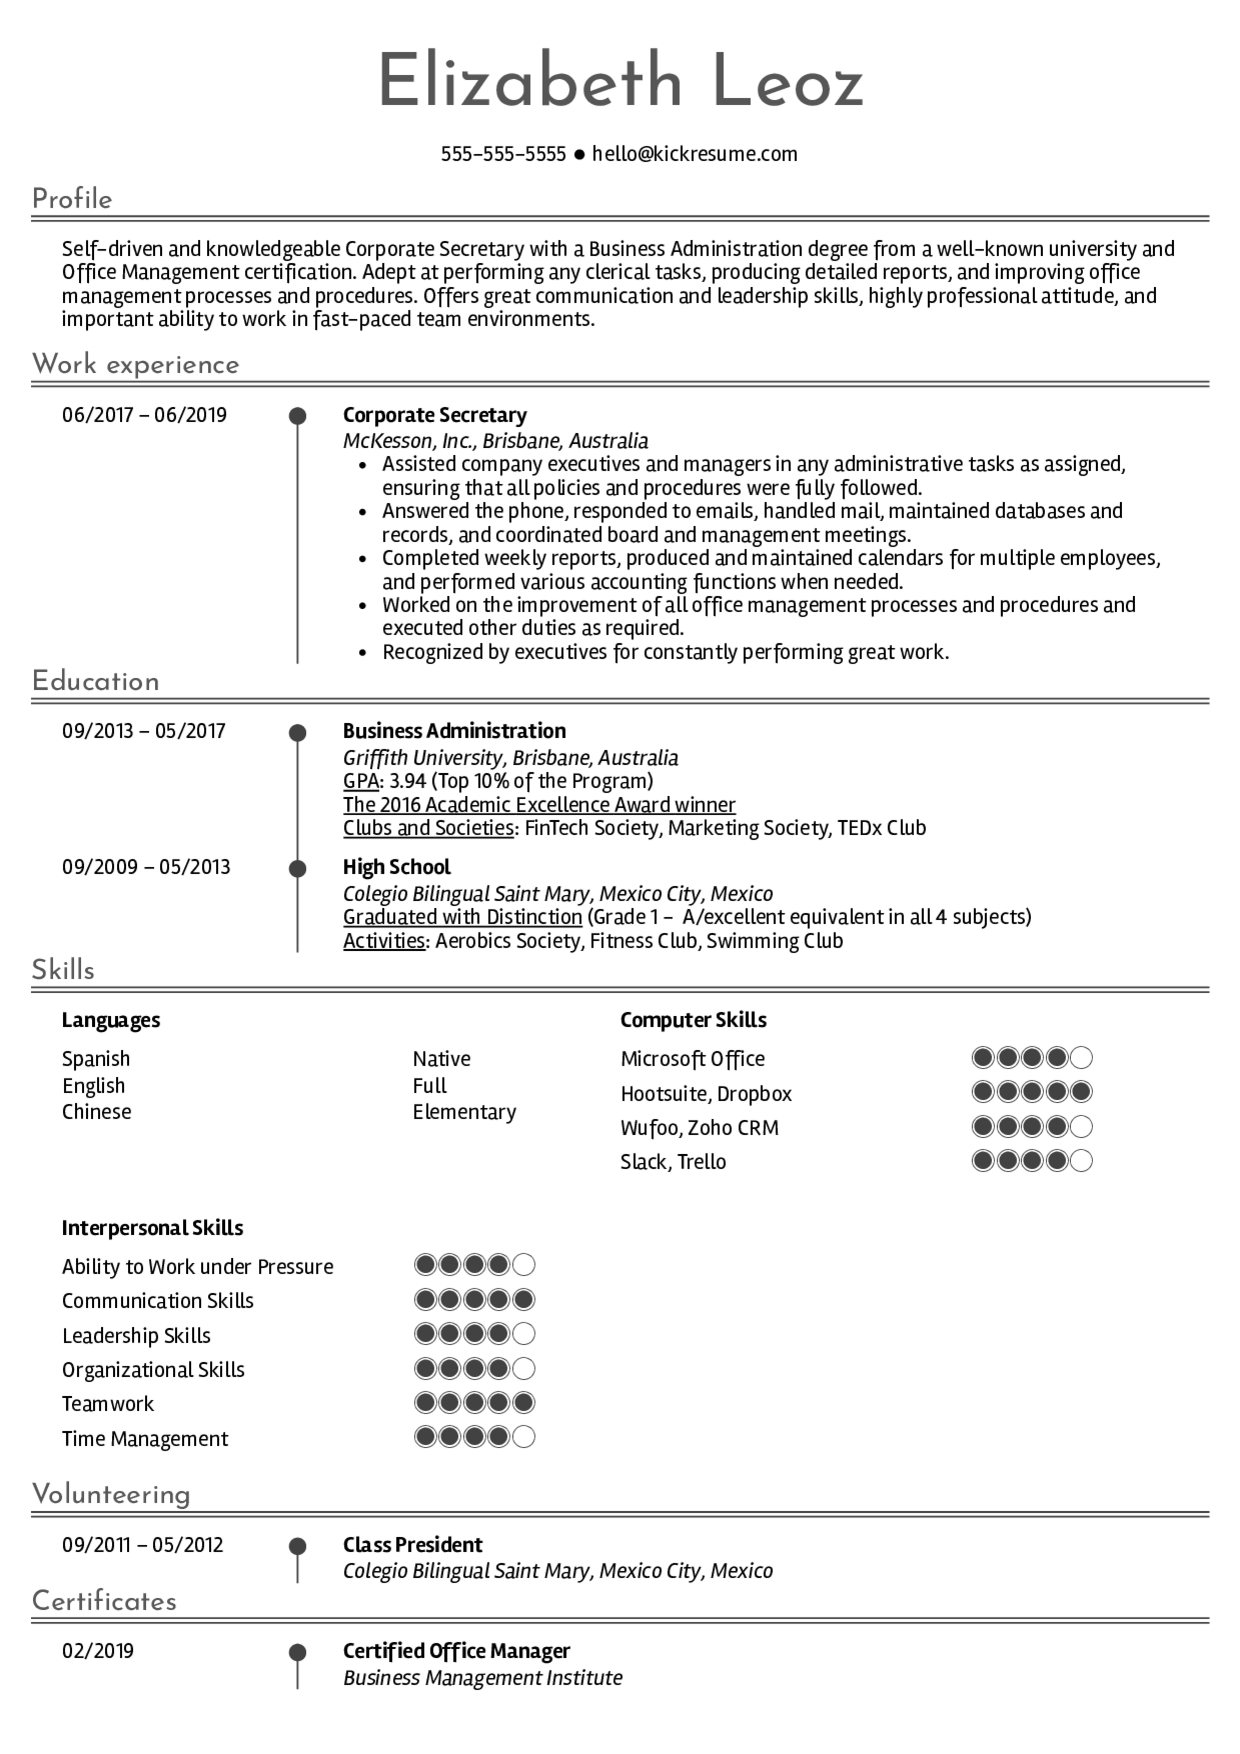 Resume Examplesreal People: Corporate Secretary Resume Throughout Corporate Secretary Certificate Template